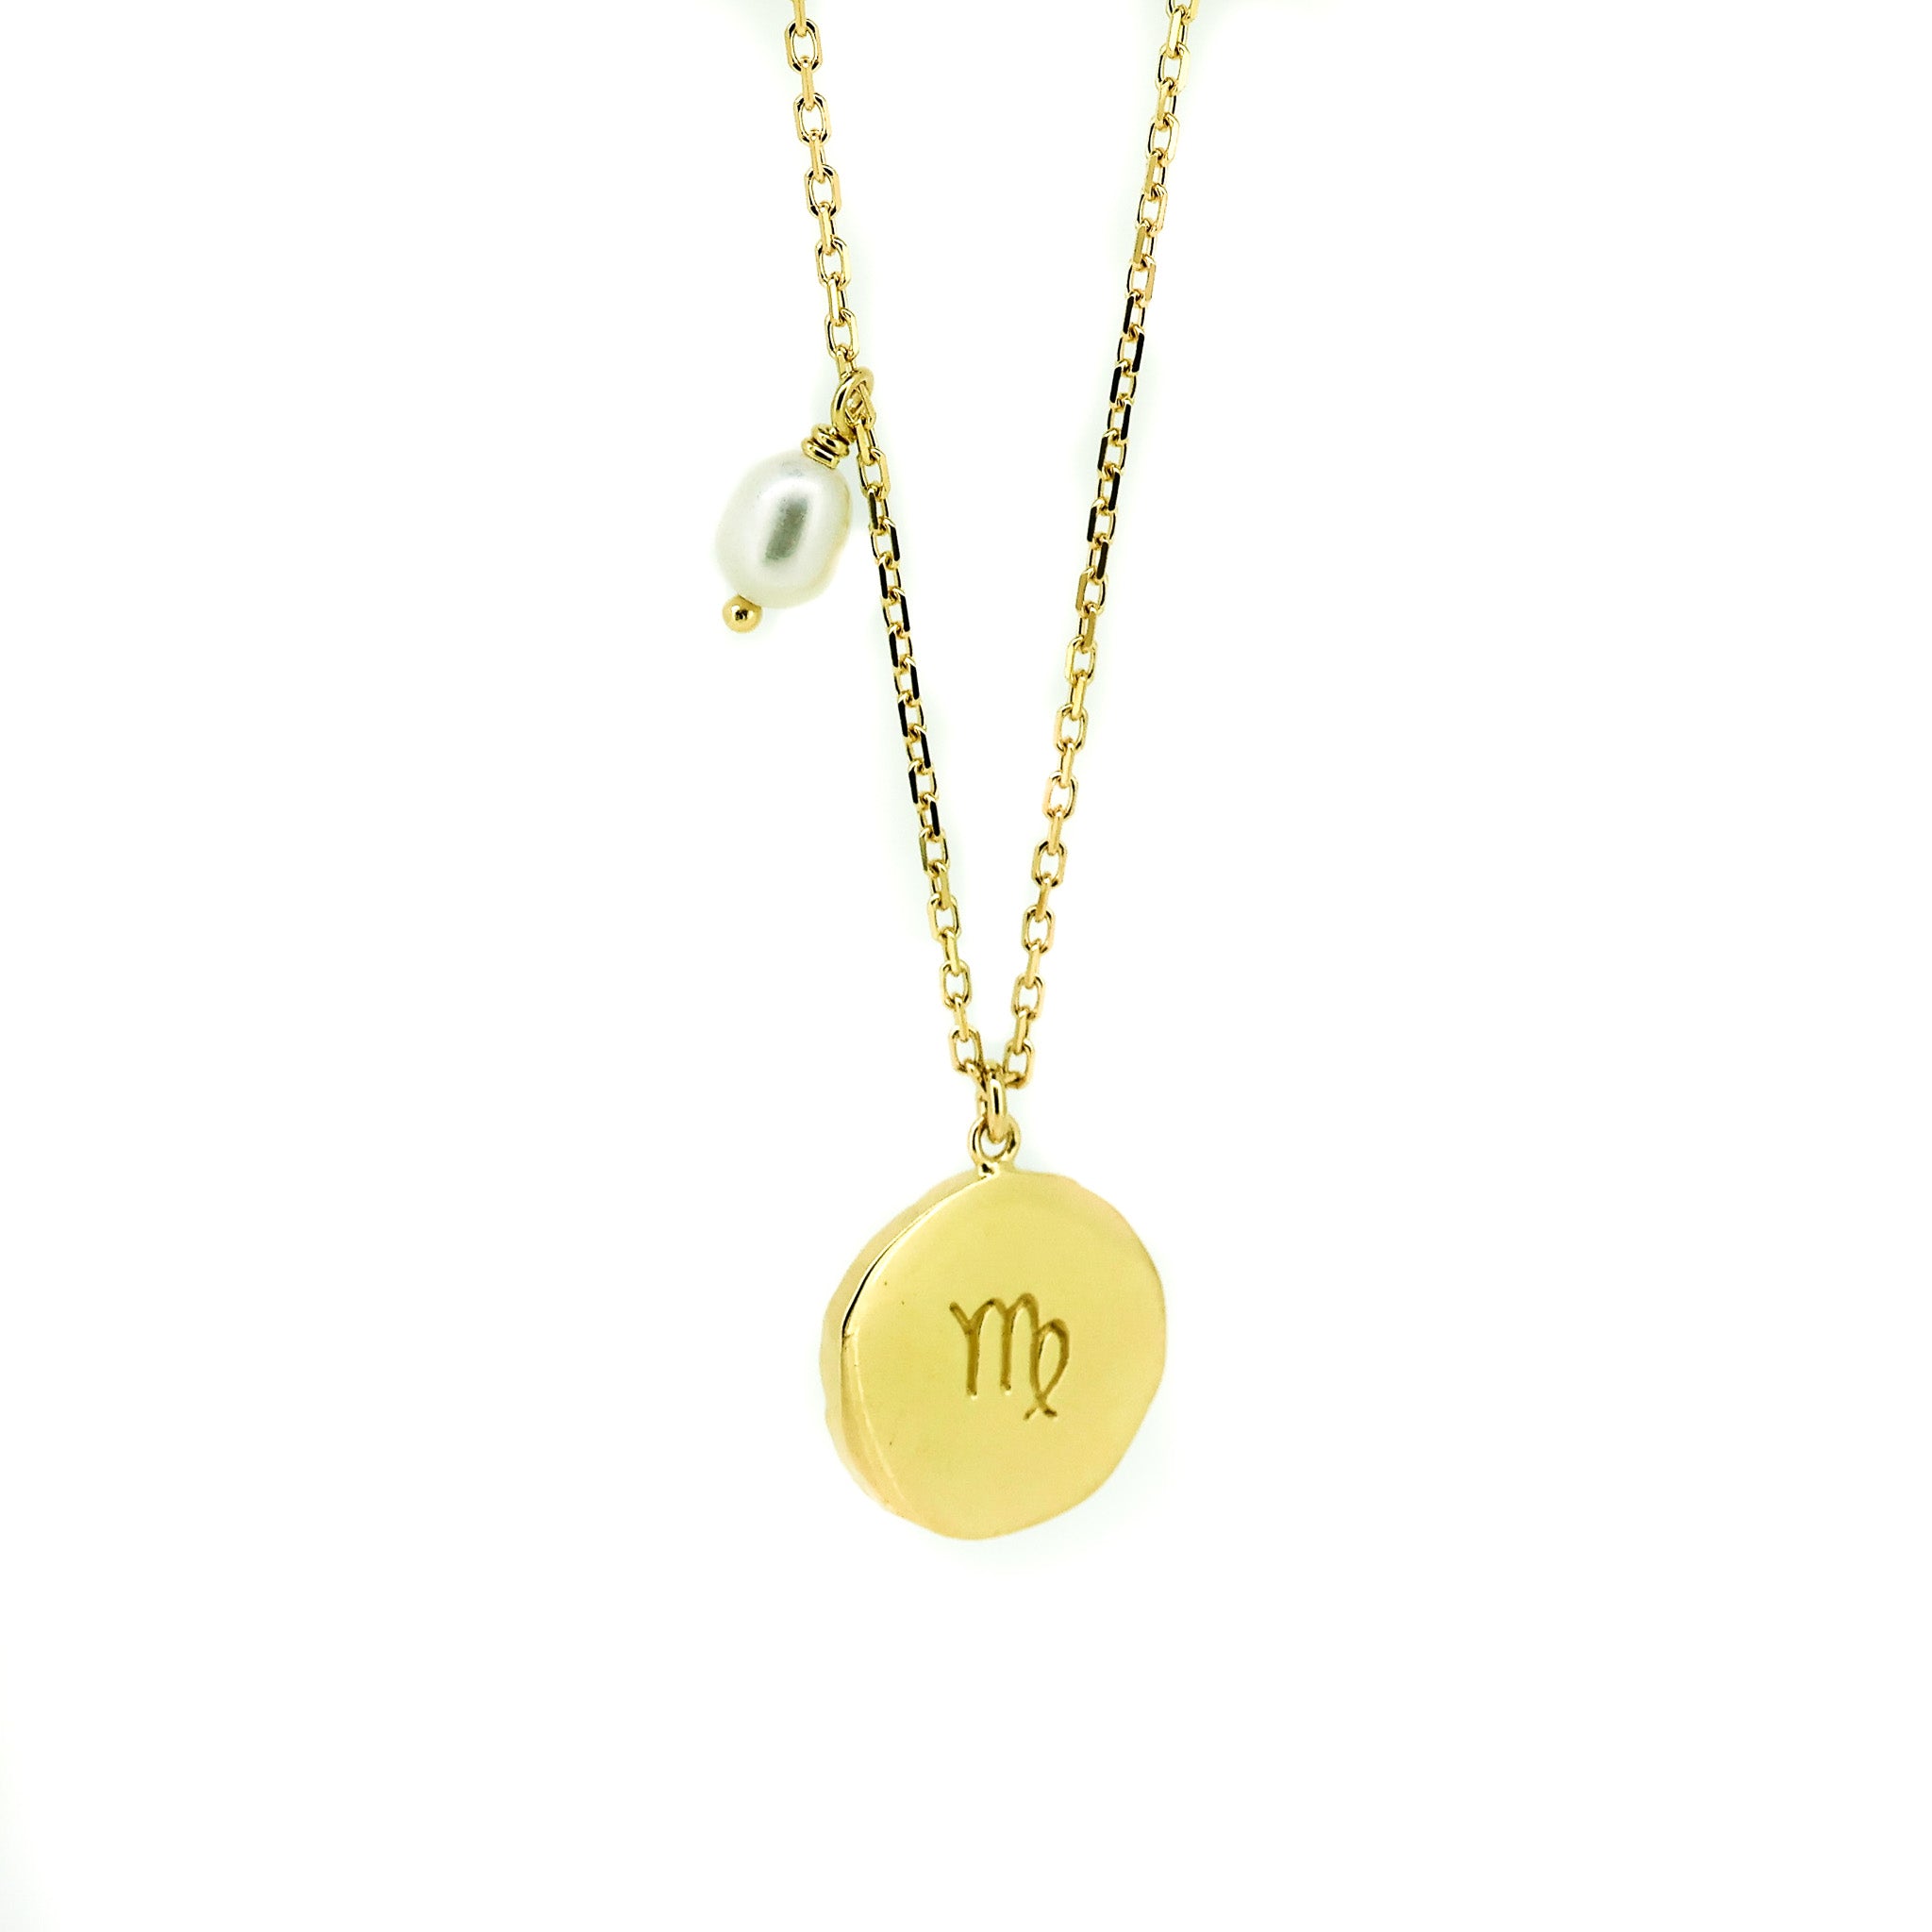 gemini zodiac necklace in gold